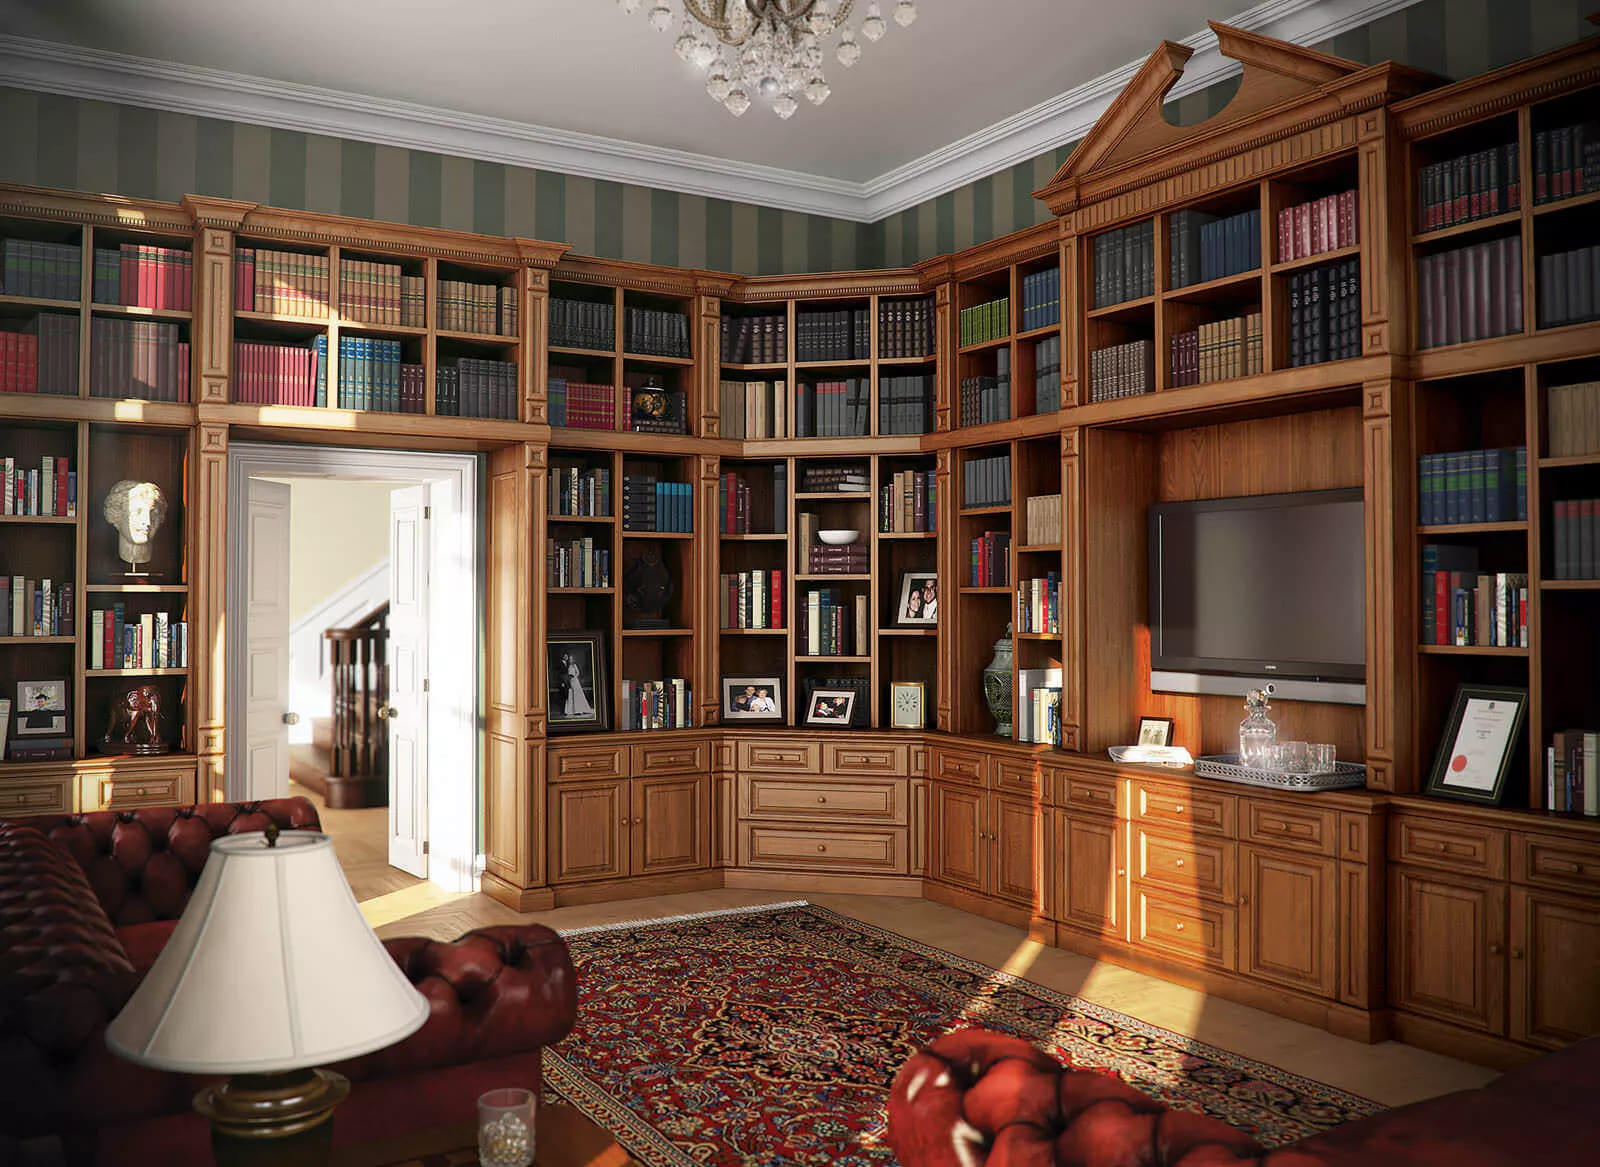 3d home библиотеки. Книжный шкаф Уильям Мориис. Комната с книжным шкафом. Книжный шкаф. Шкафы для библиотеки домашней.